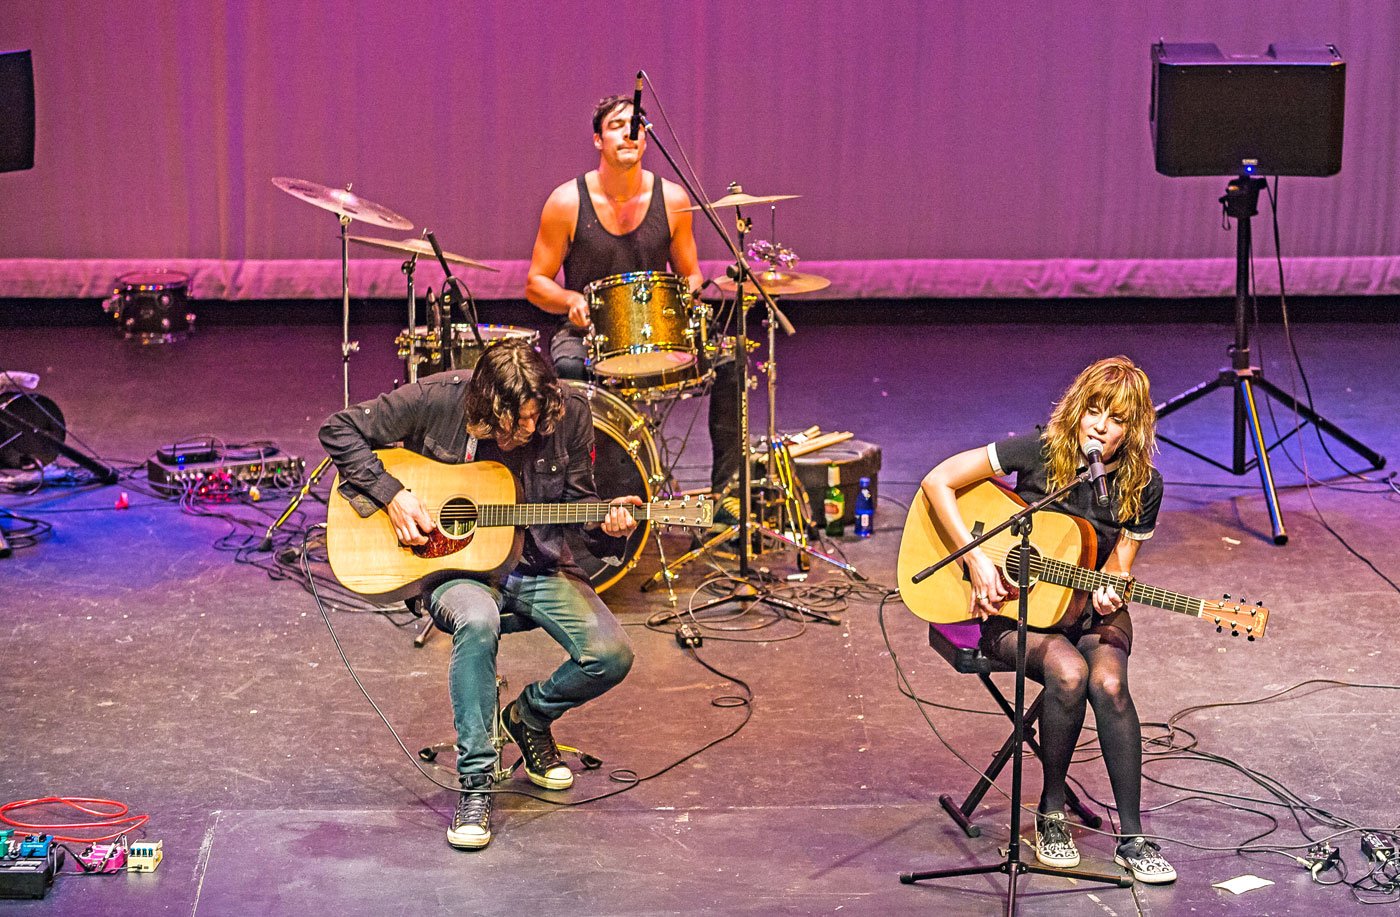 Rock concert raises $10,000 for Breast Cancer Foundation